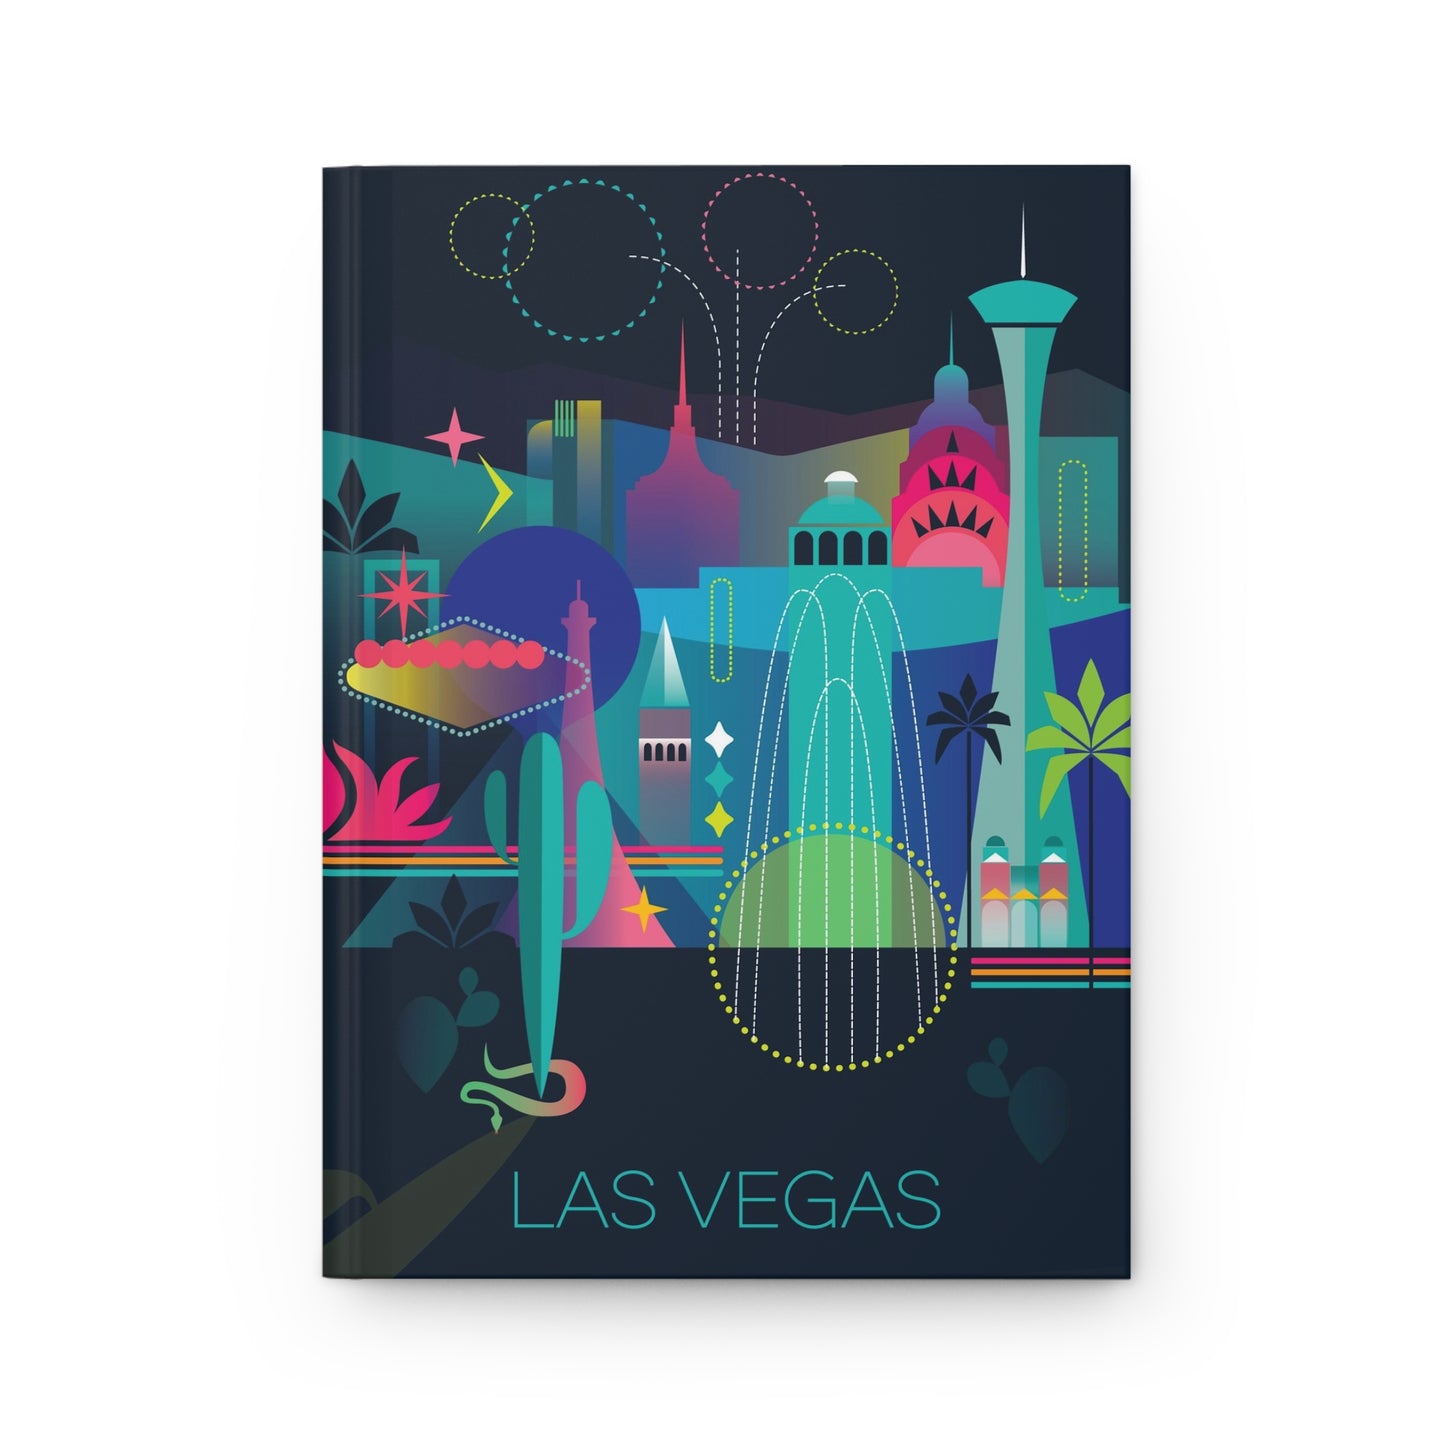 Las Vegas Hardcover Journal